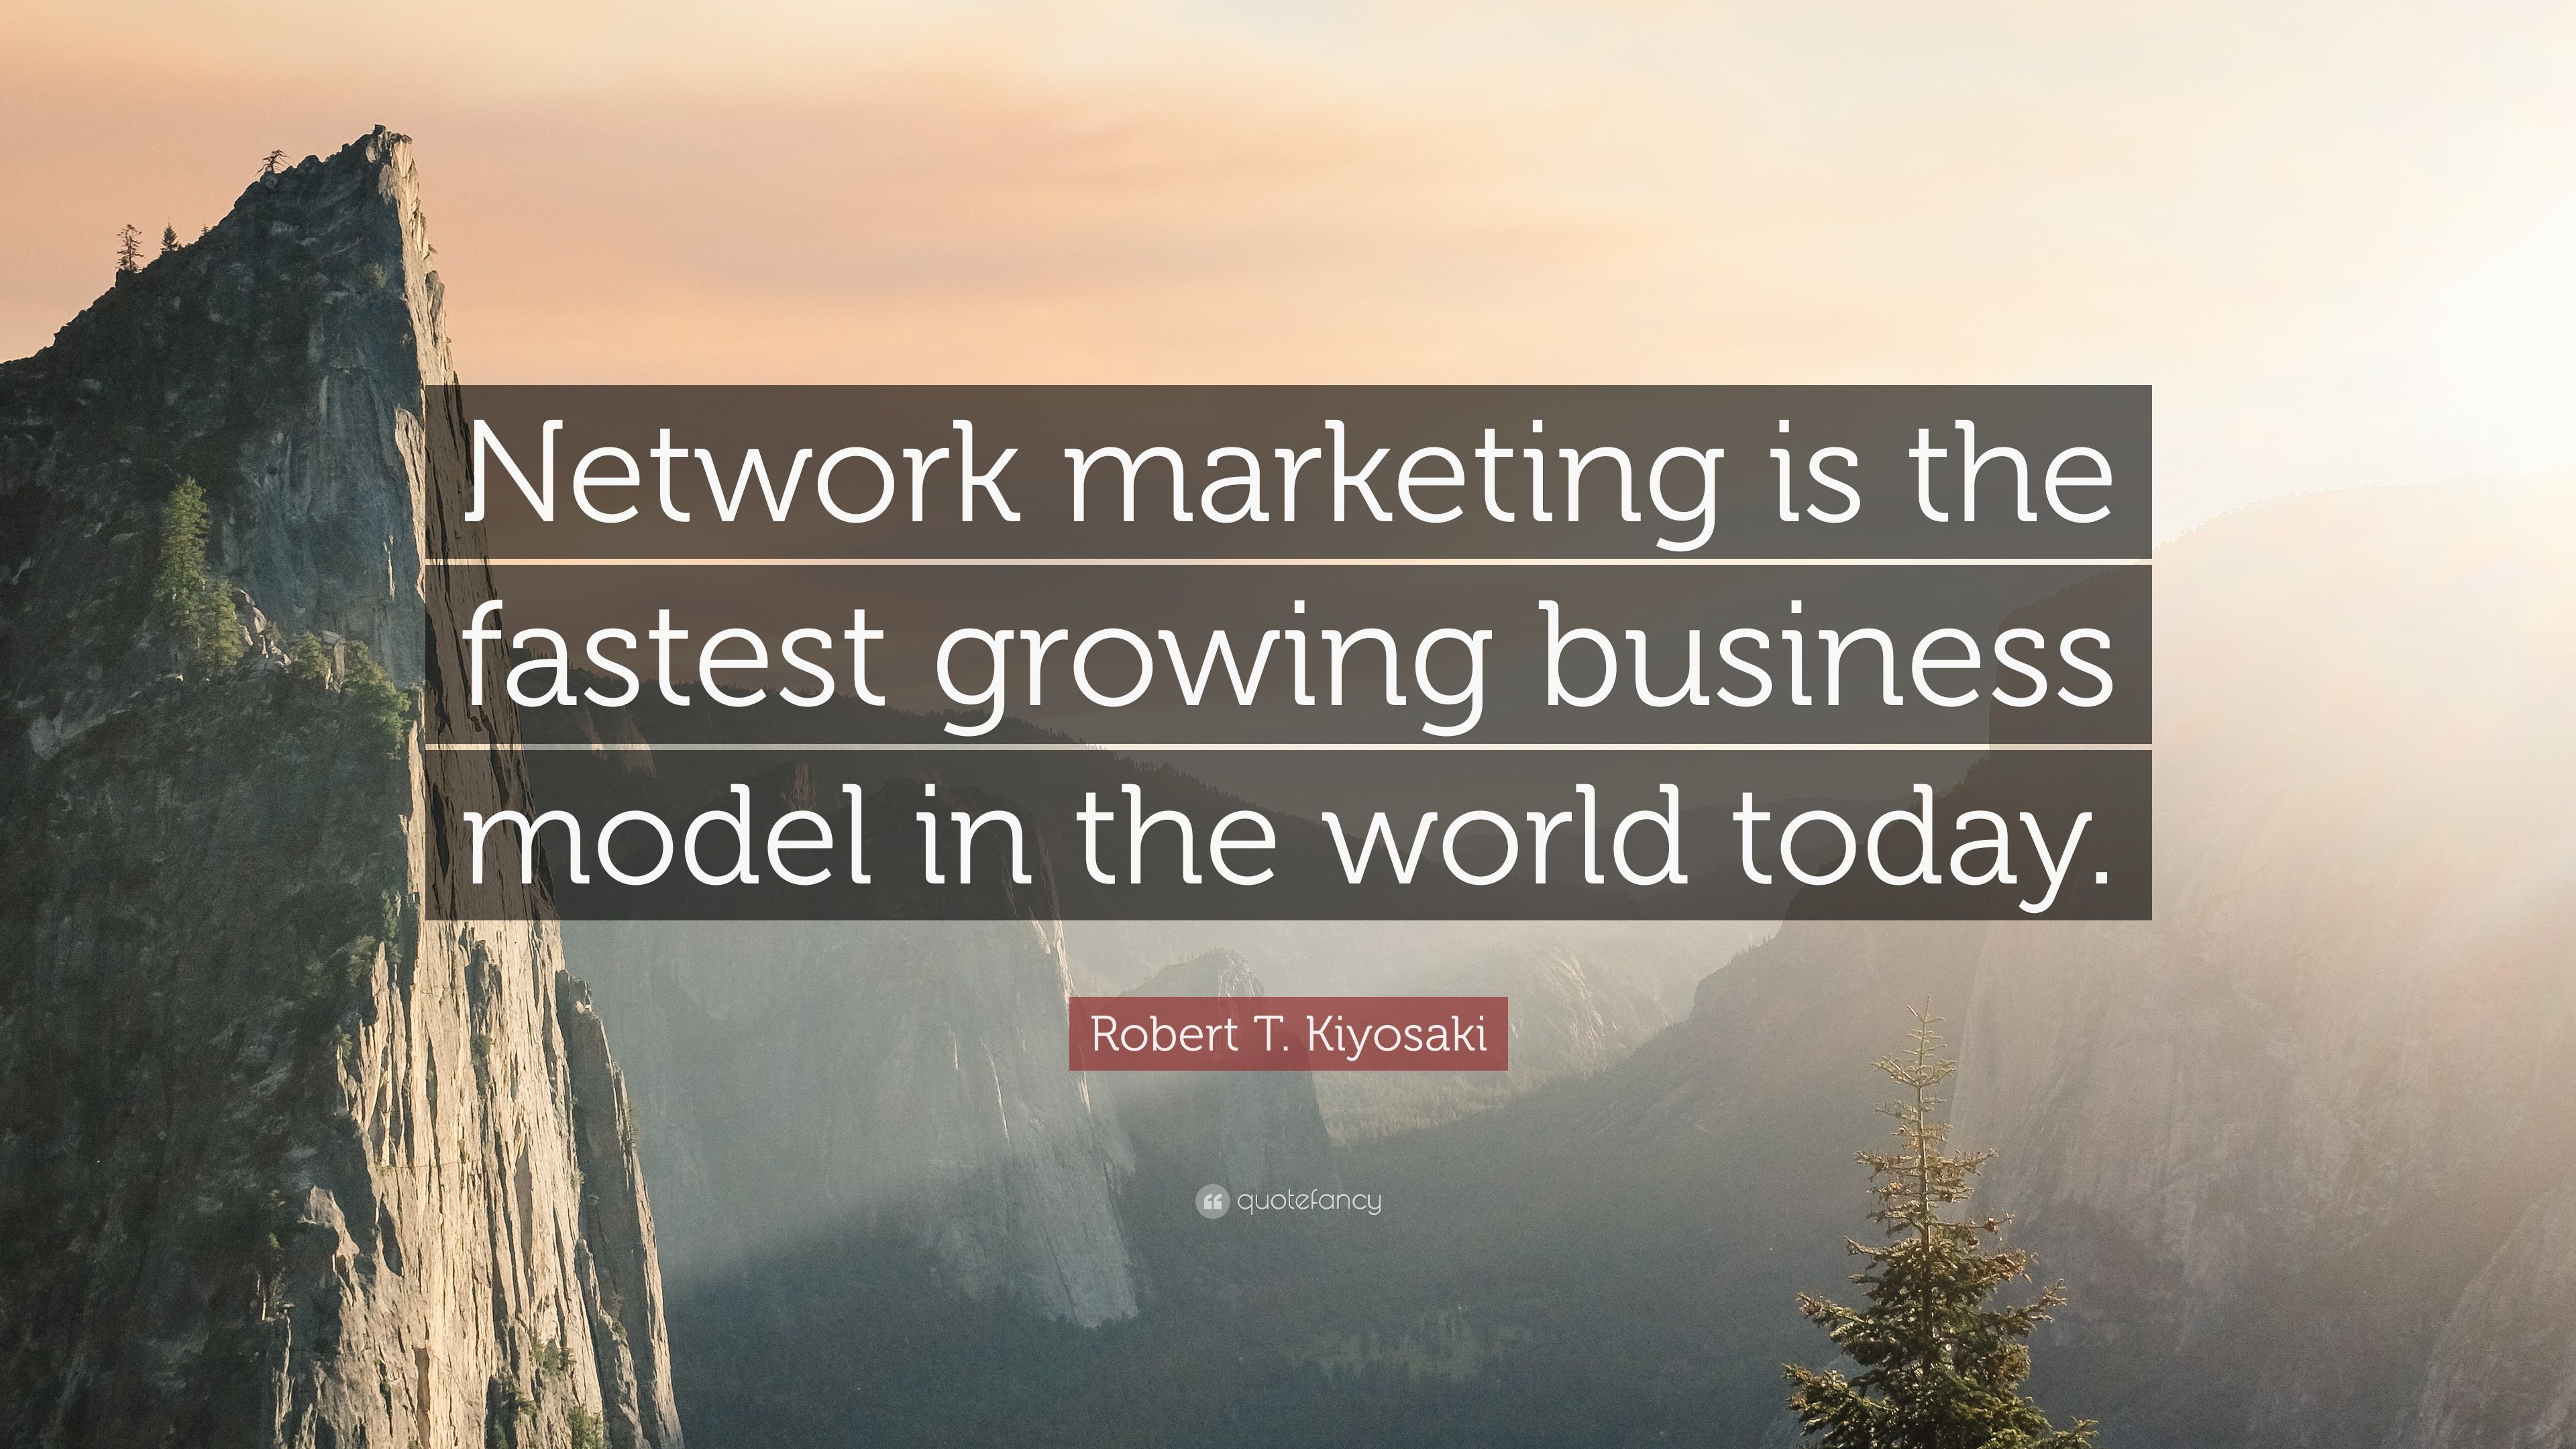 Robert T. Kiyosaki Quote: “Network marketing is the fastest